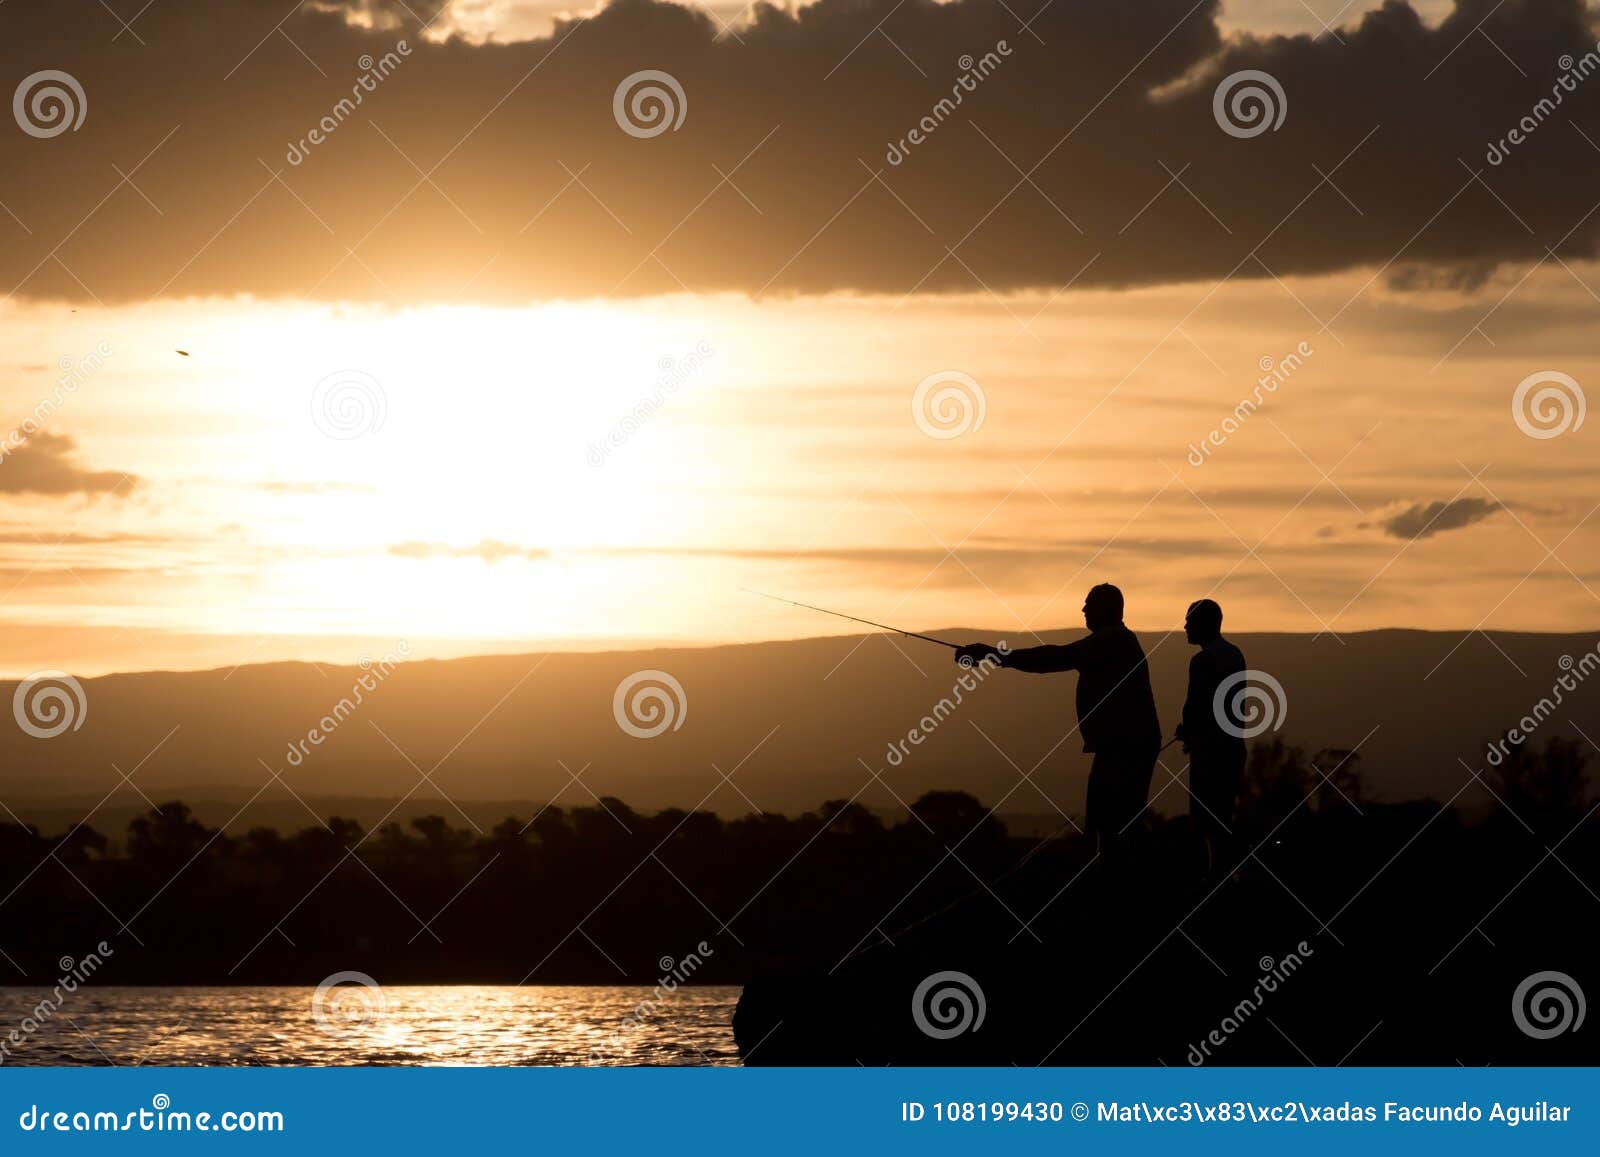 men fishing at the lake at sunset